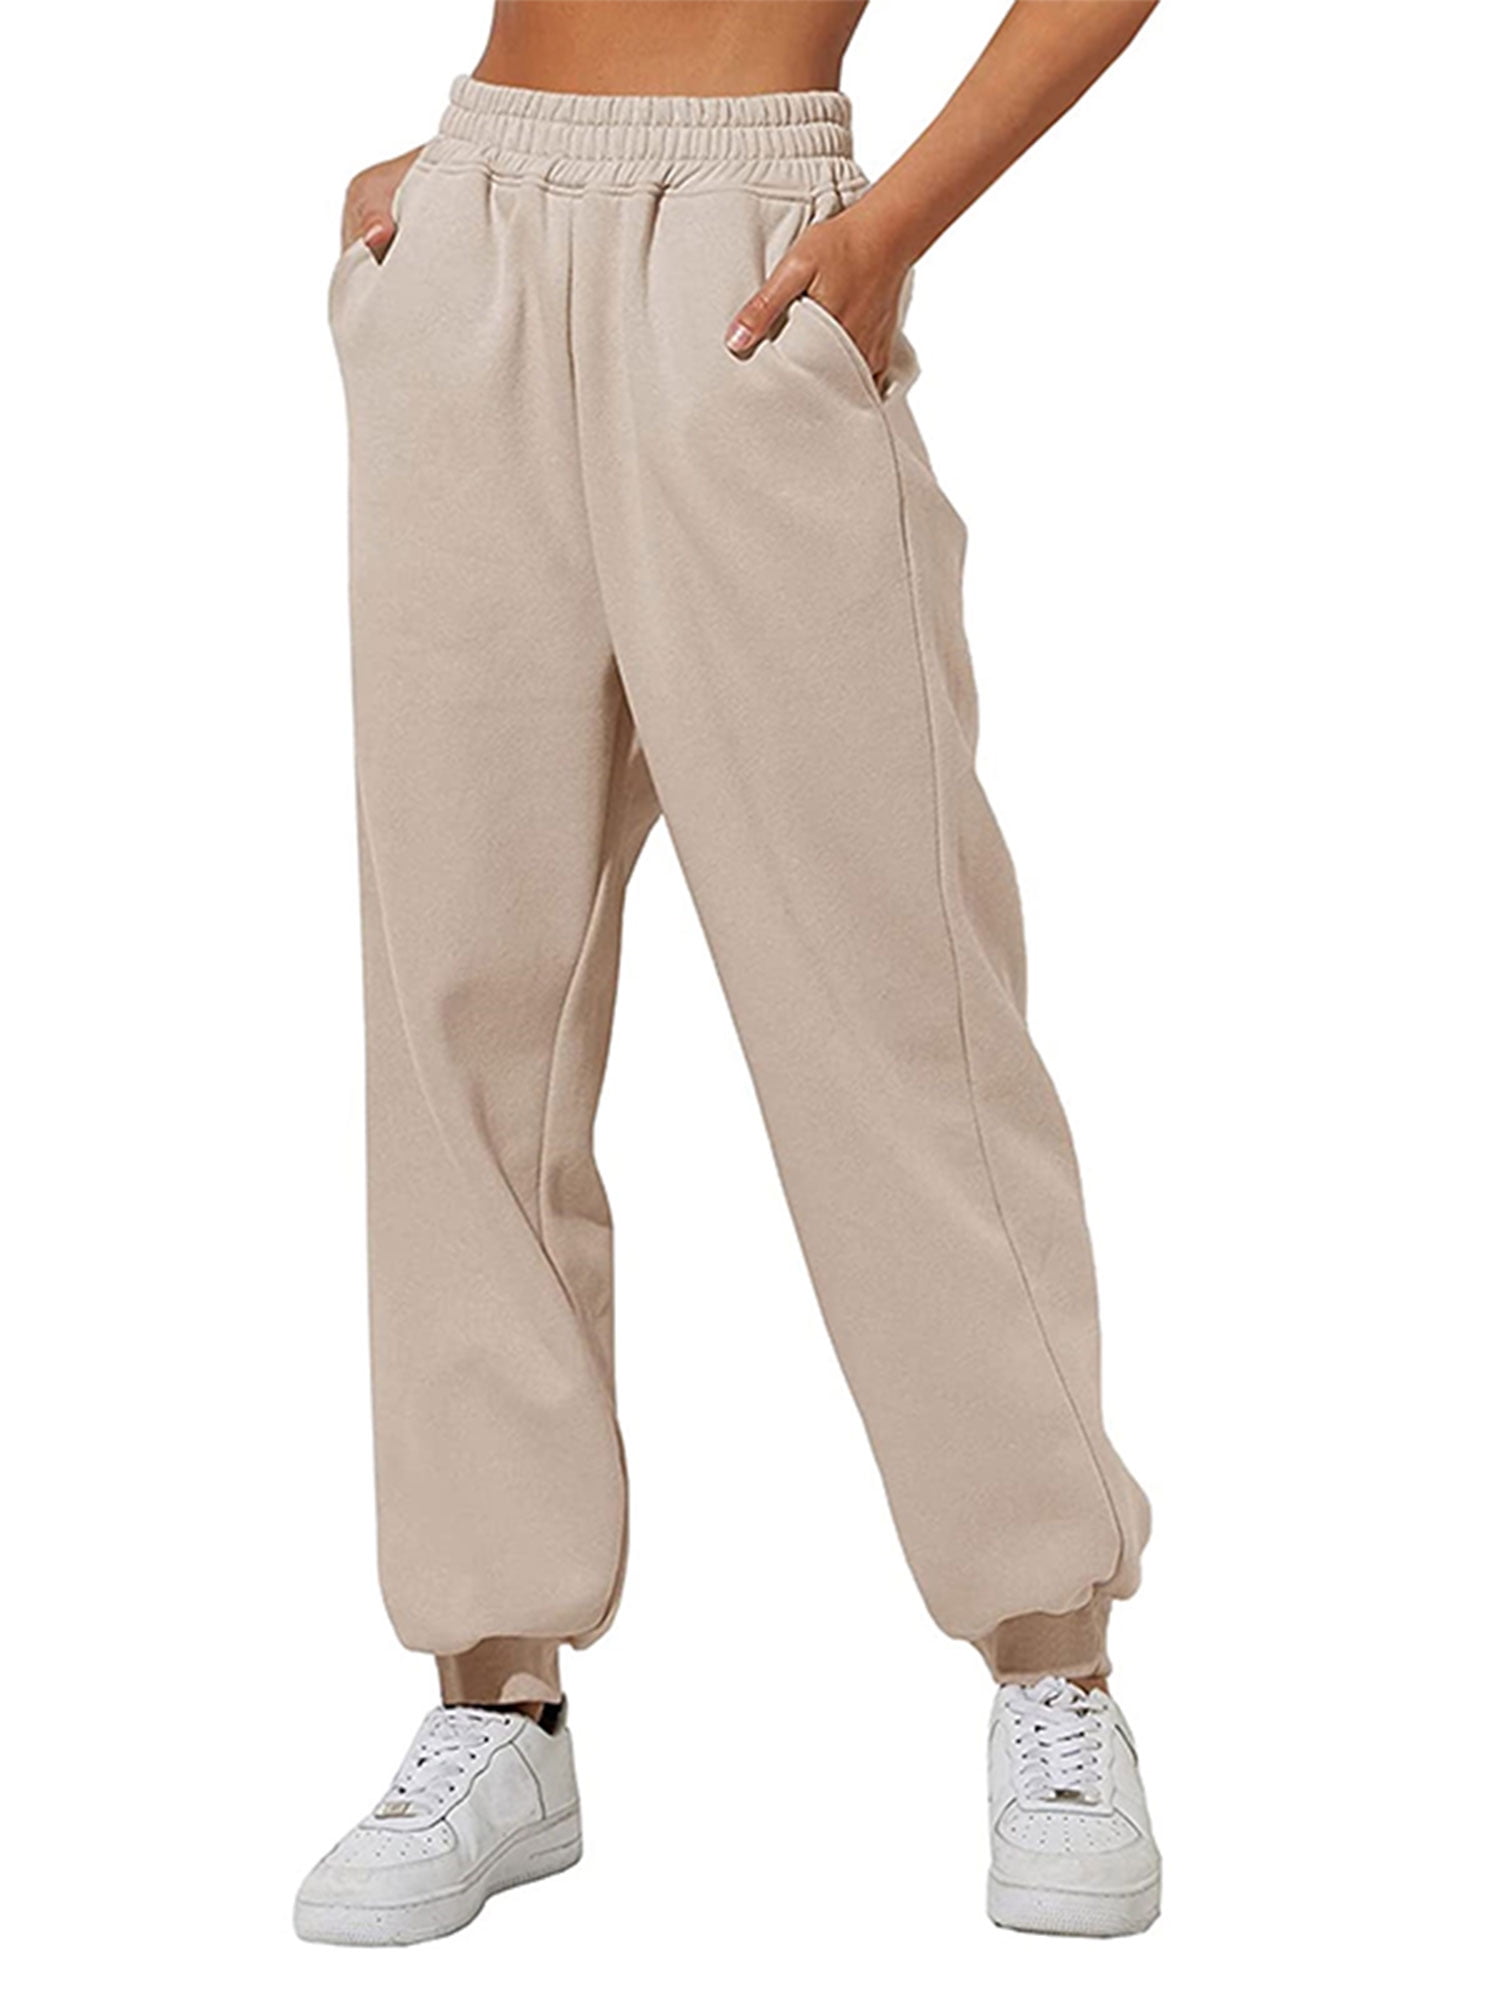 Women's Fleece Lined Sweatpants Slim-Fit Warm Comfy Sports Pants